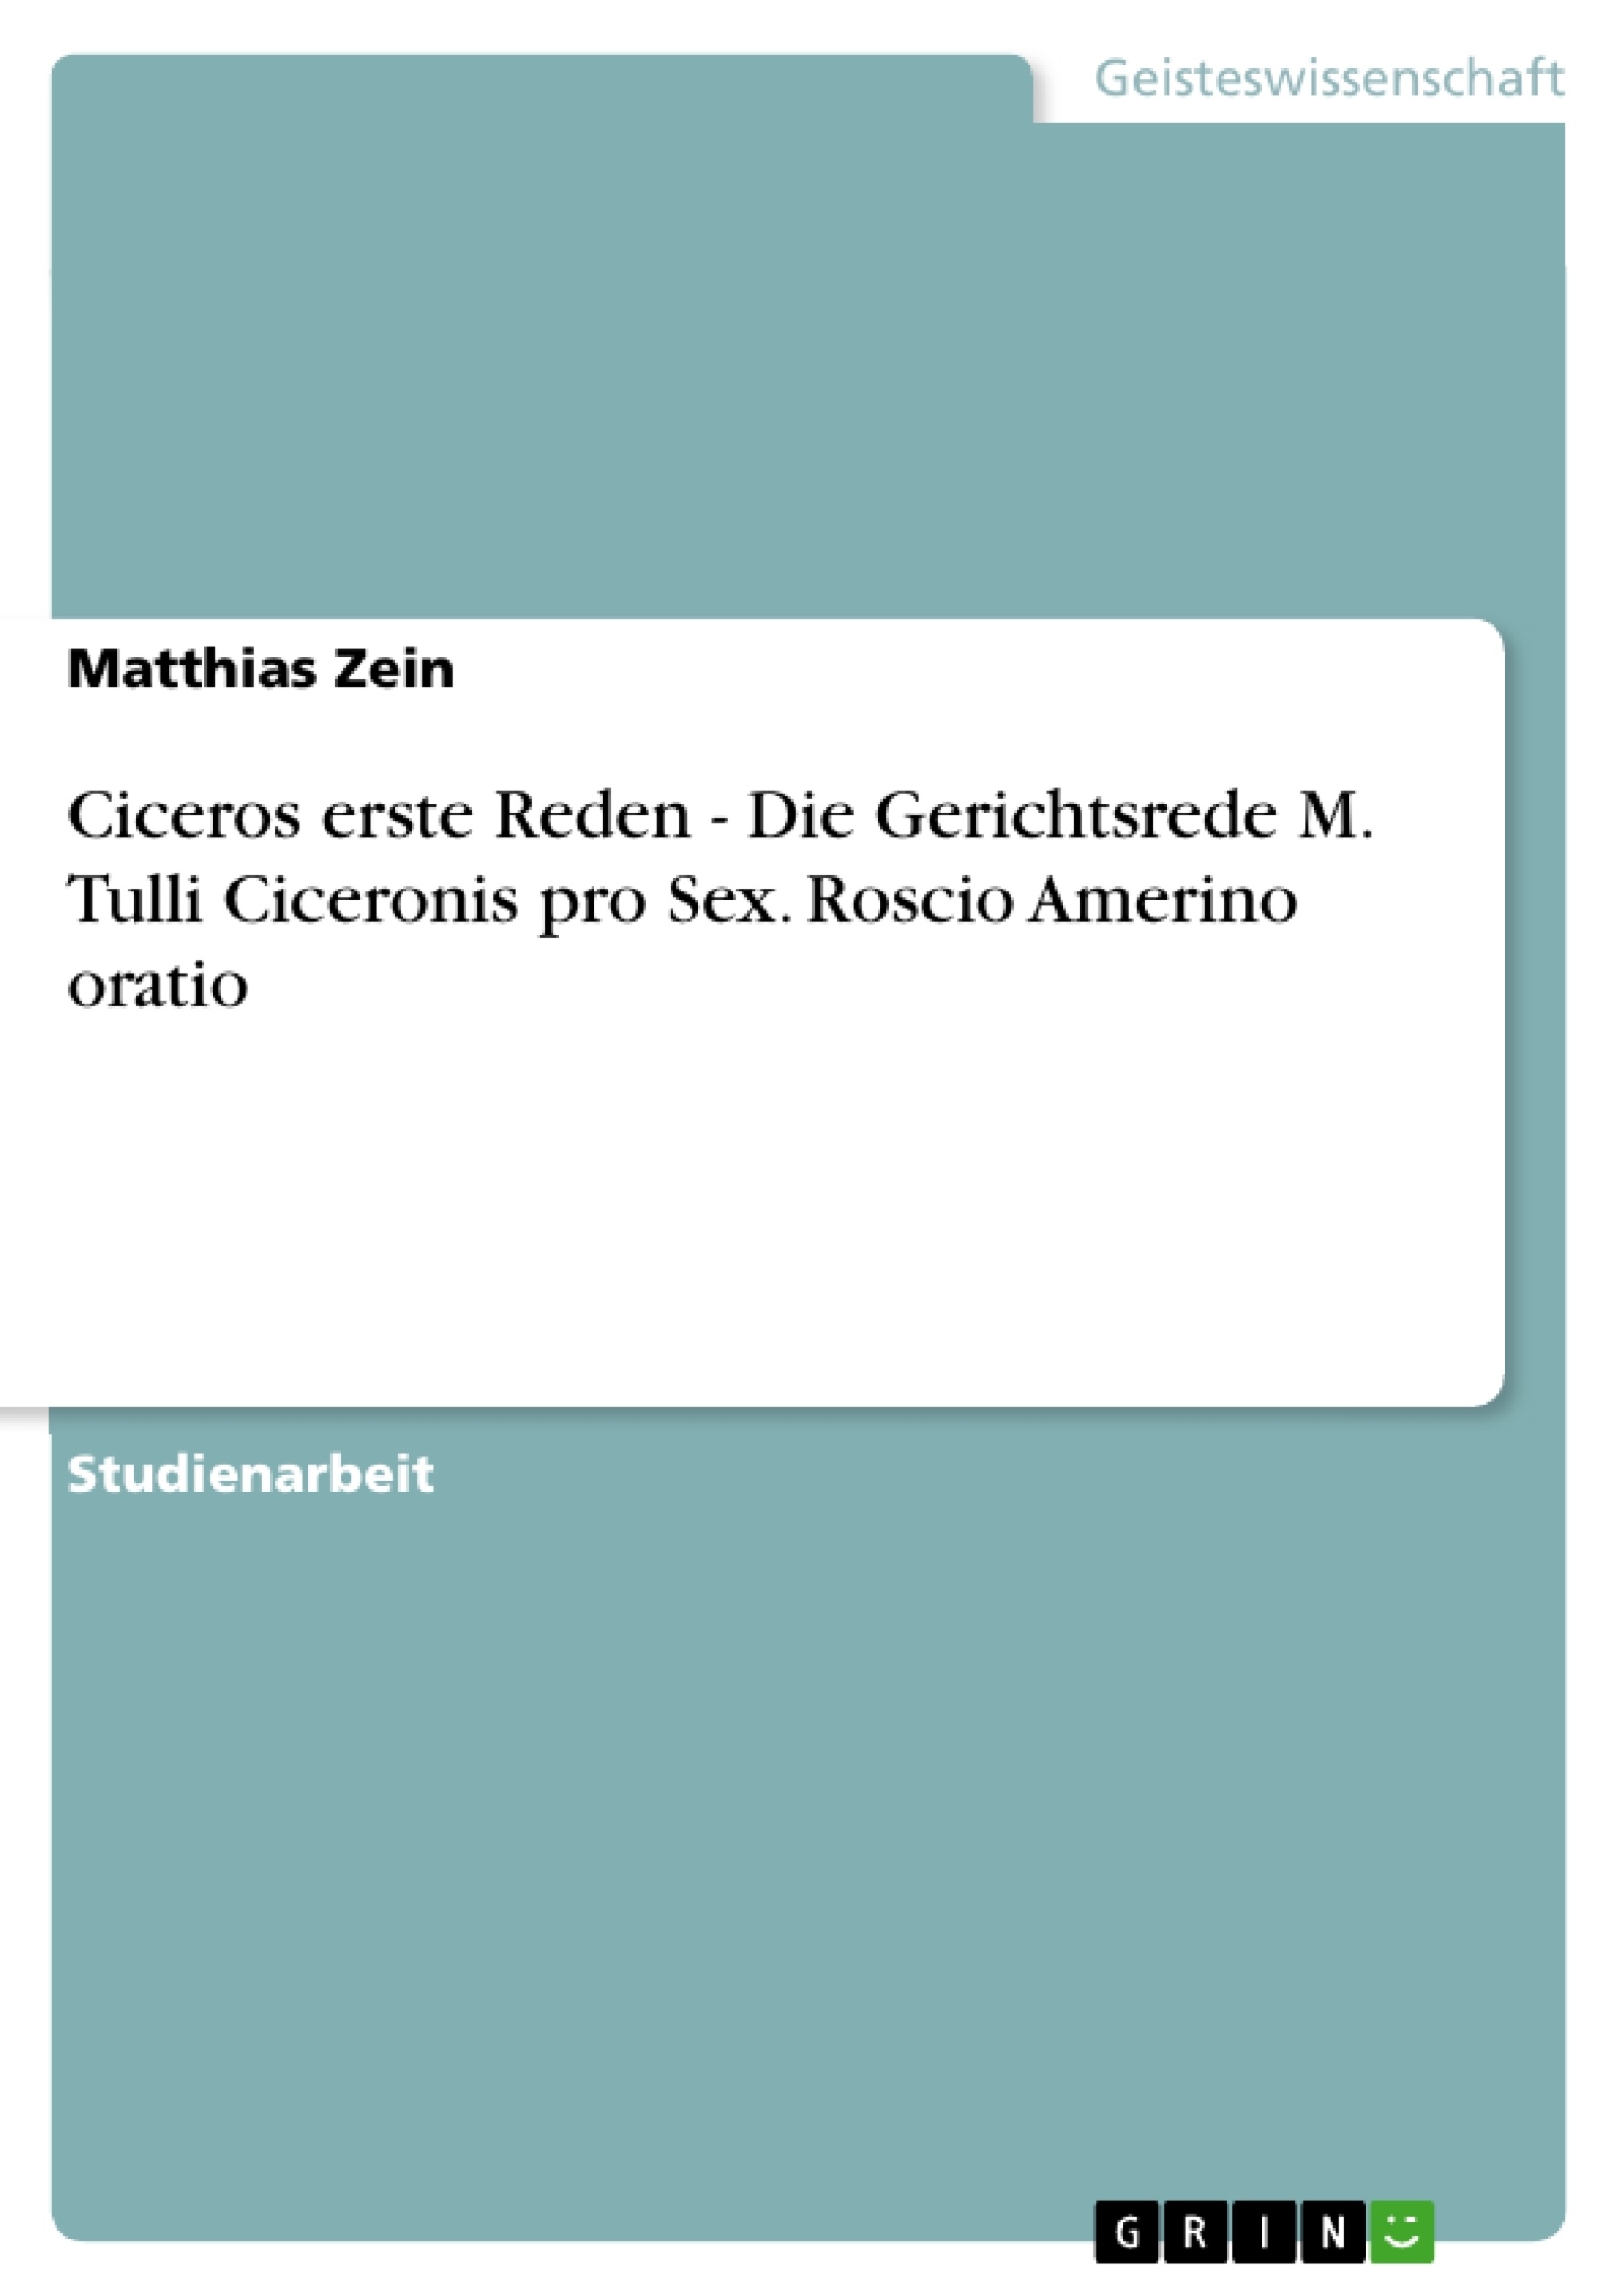 Titre: Ciceros erste Reden - Die Gerichtsrede M. Tulli Ciceronis pro Sex. Roscio Amerino oratio